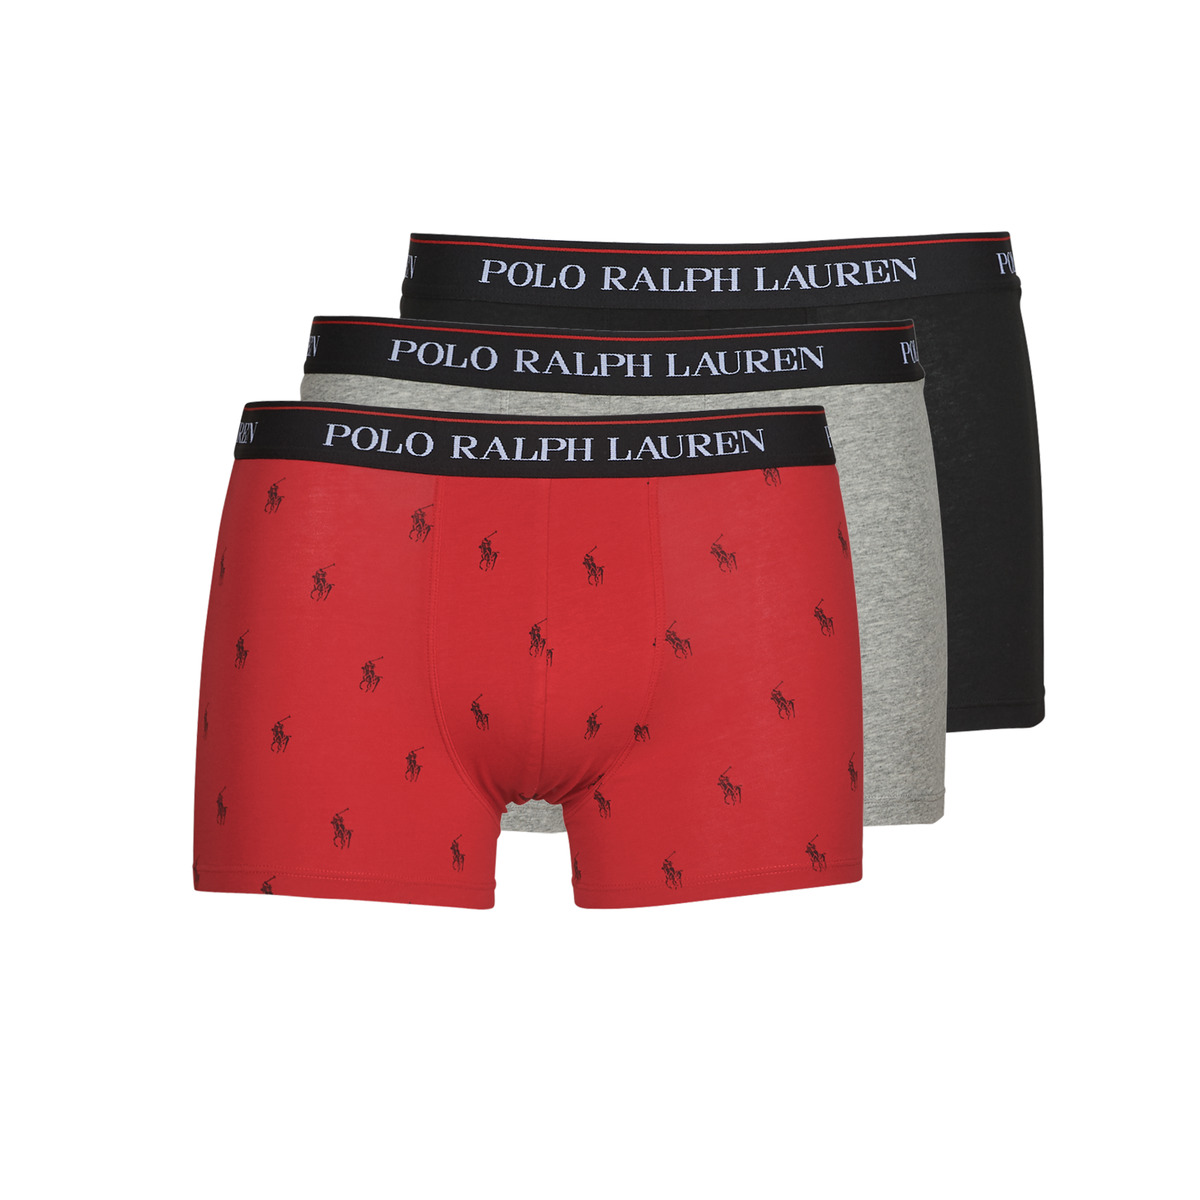 Polo Ralph Lauren Gris / Rouge / Noir CLSSIC TRUNK 3 PACK qWcUuosb